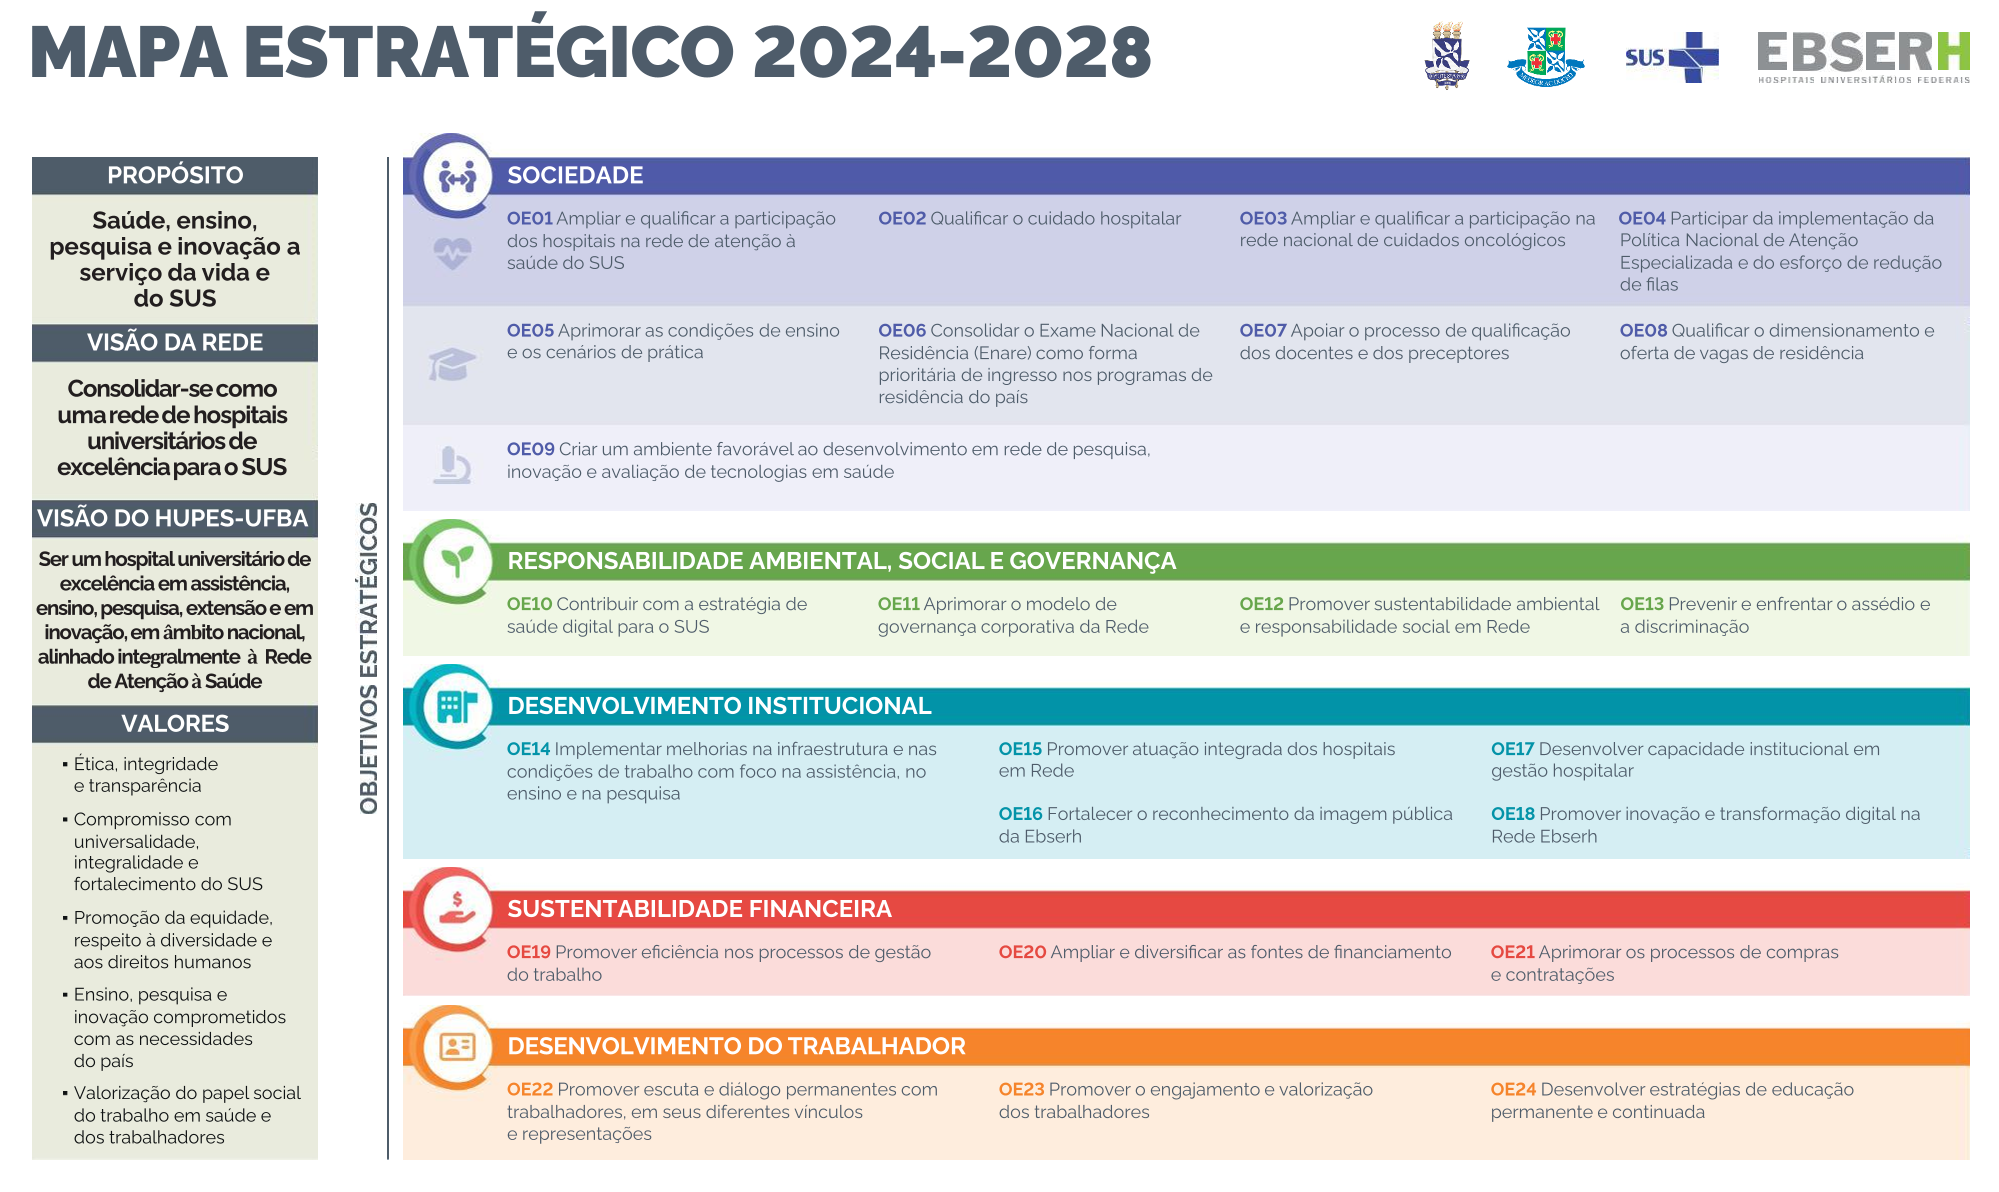 Mapa Estratégico 2024-2028 Hupes-UFBA.png